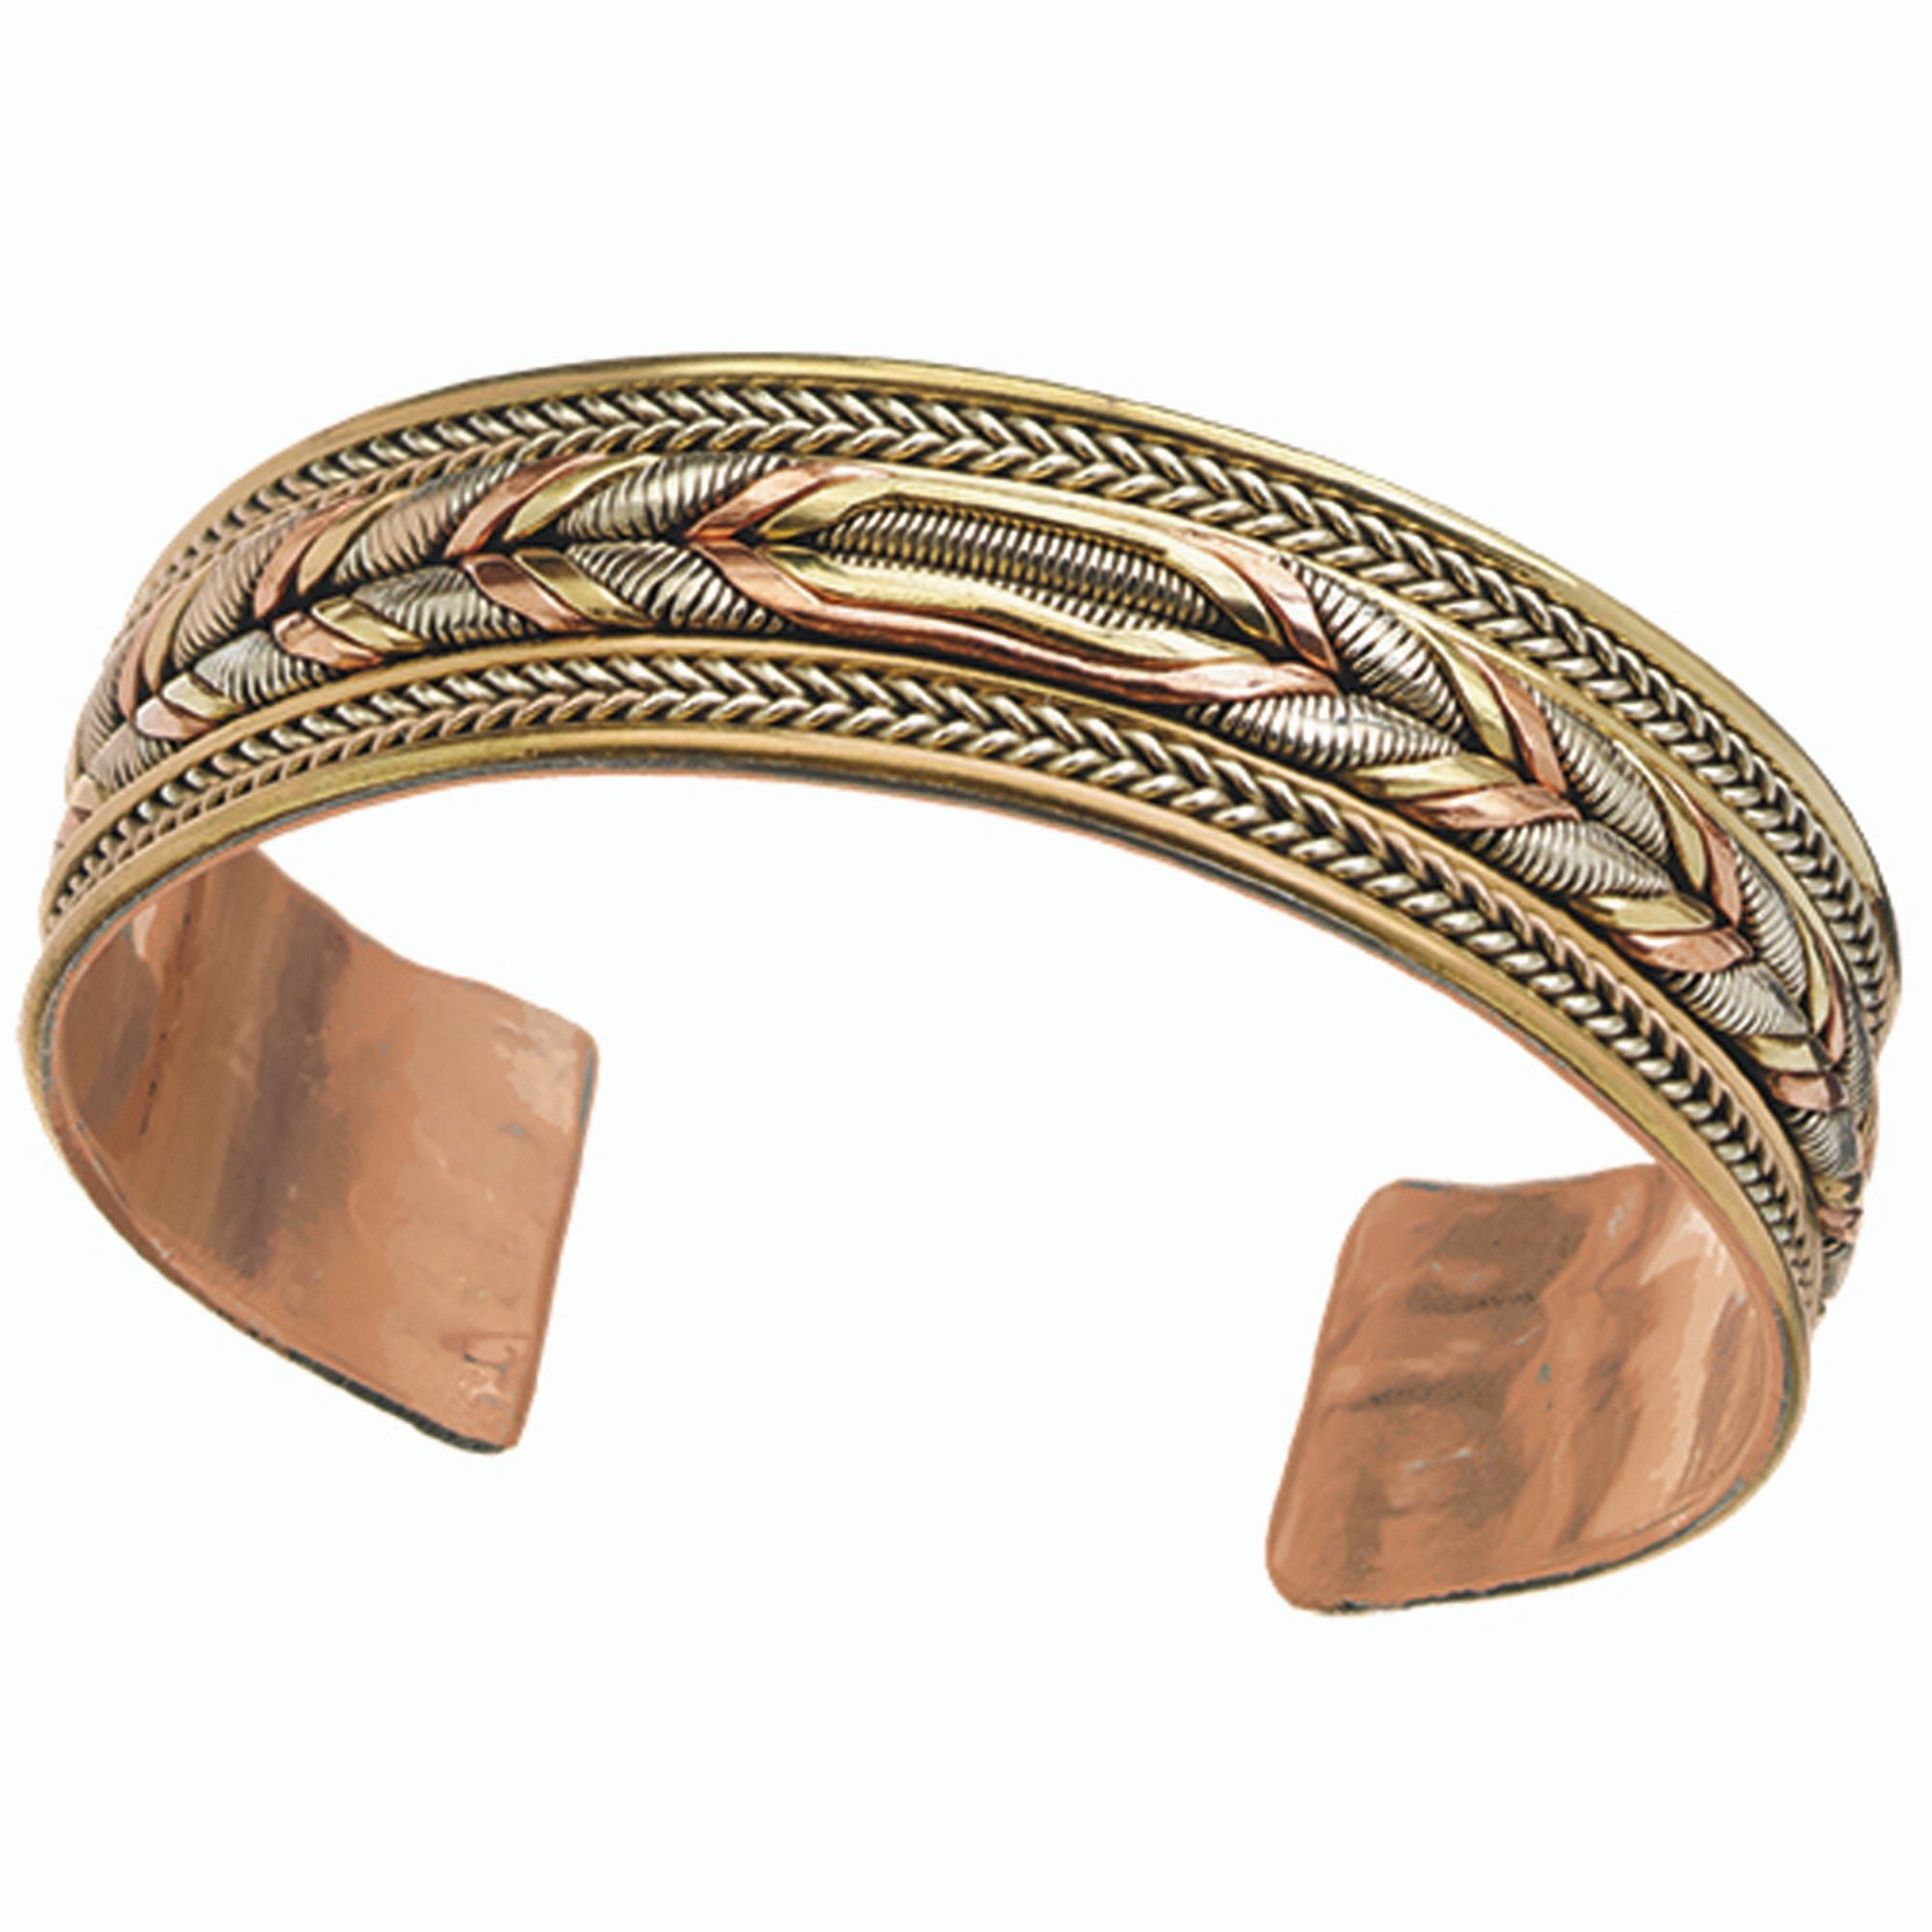 Copper and Brass Cuff Bracelet: Healing Braid - Global Crafts Wholesale